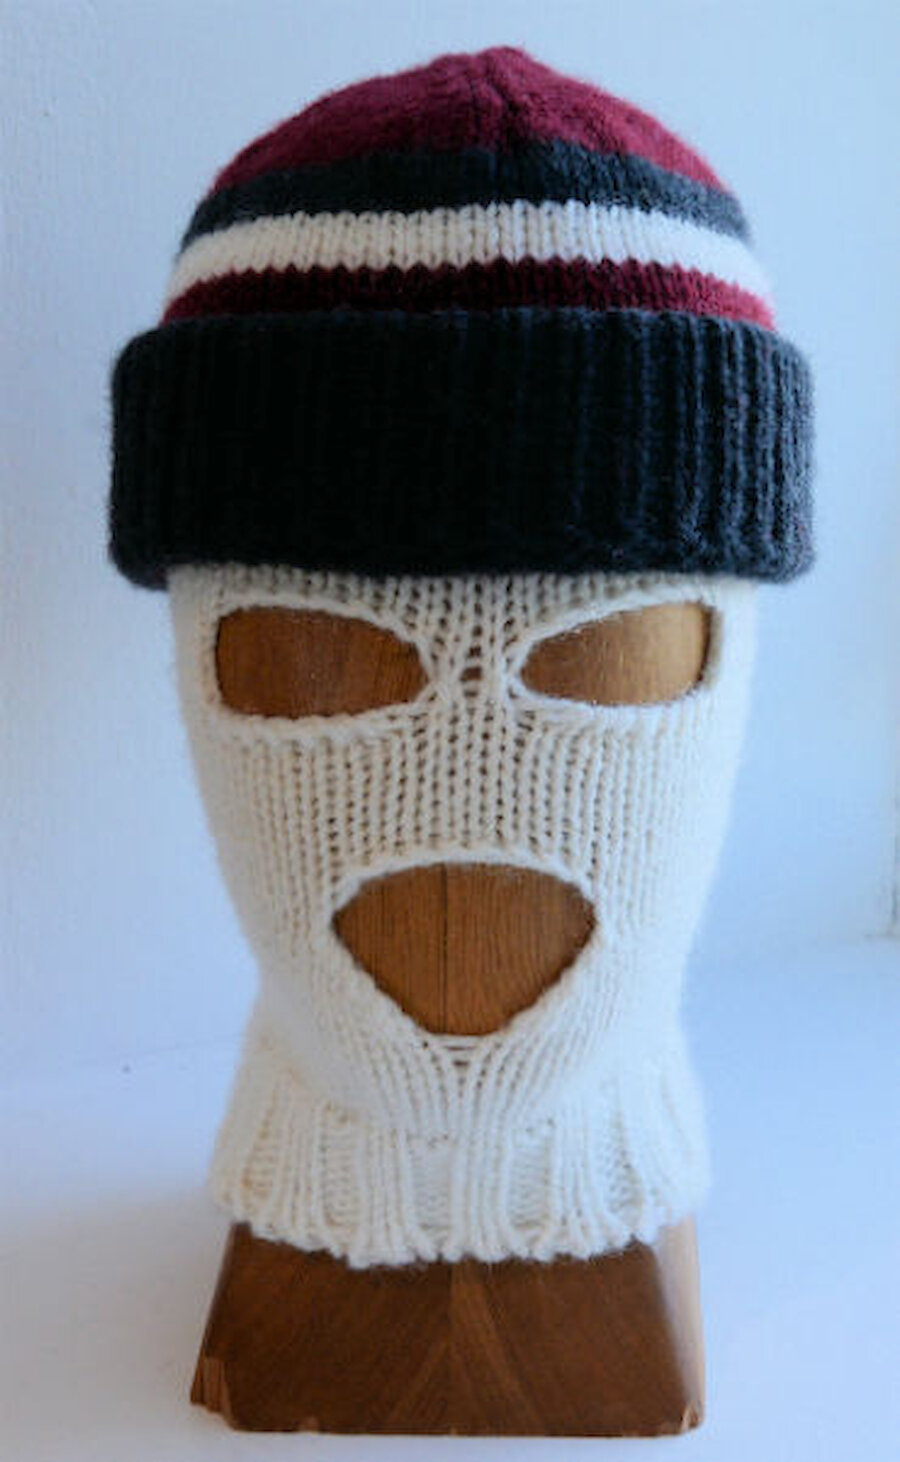 Tomas Toth's ski mask and hat (Courtesy Alastair Hamilton)